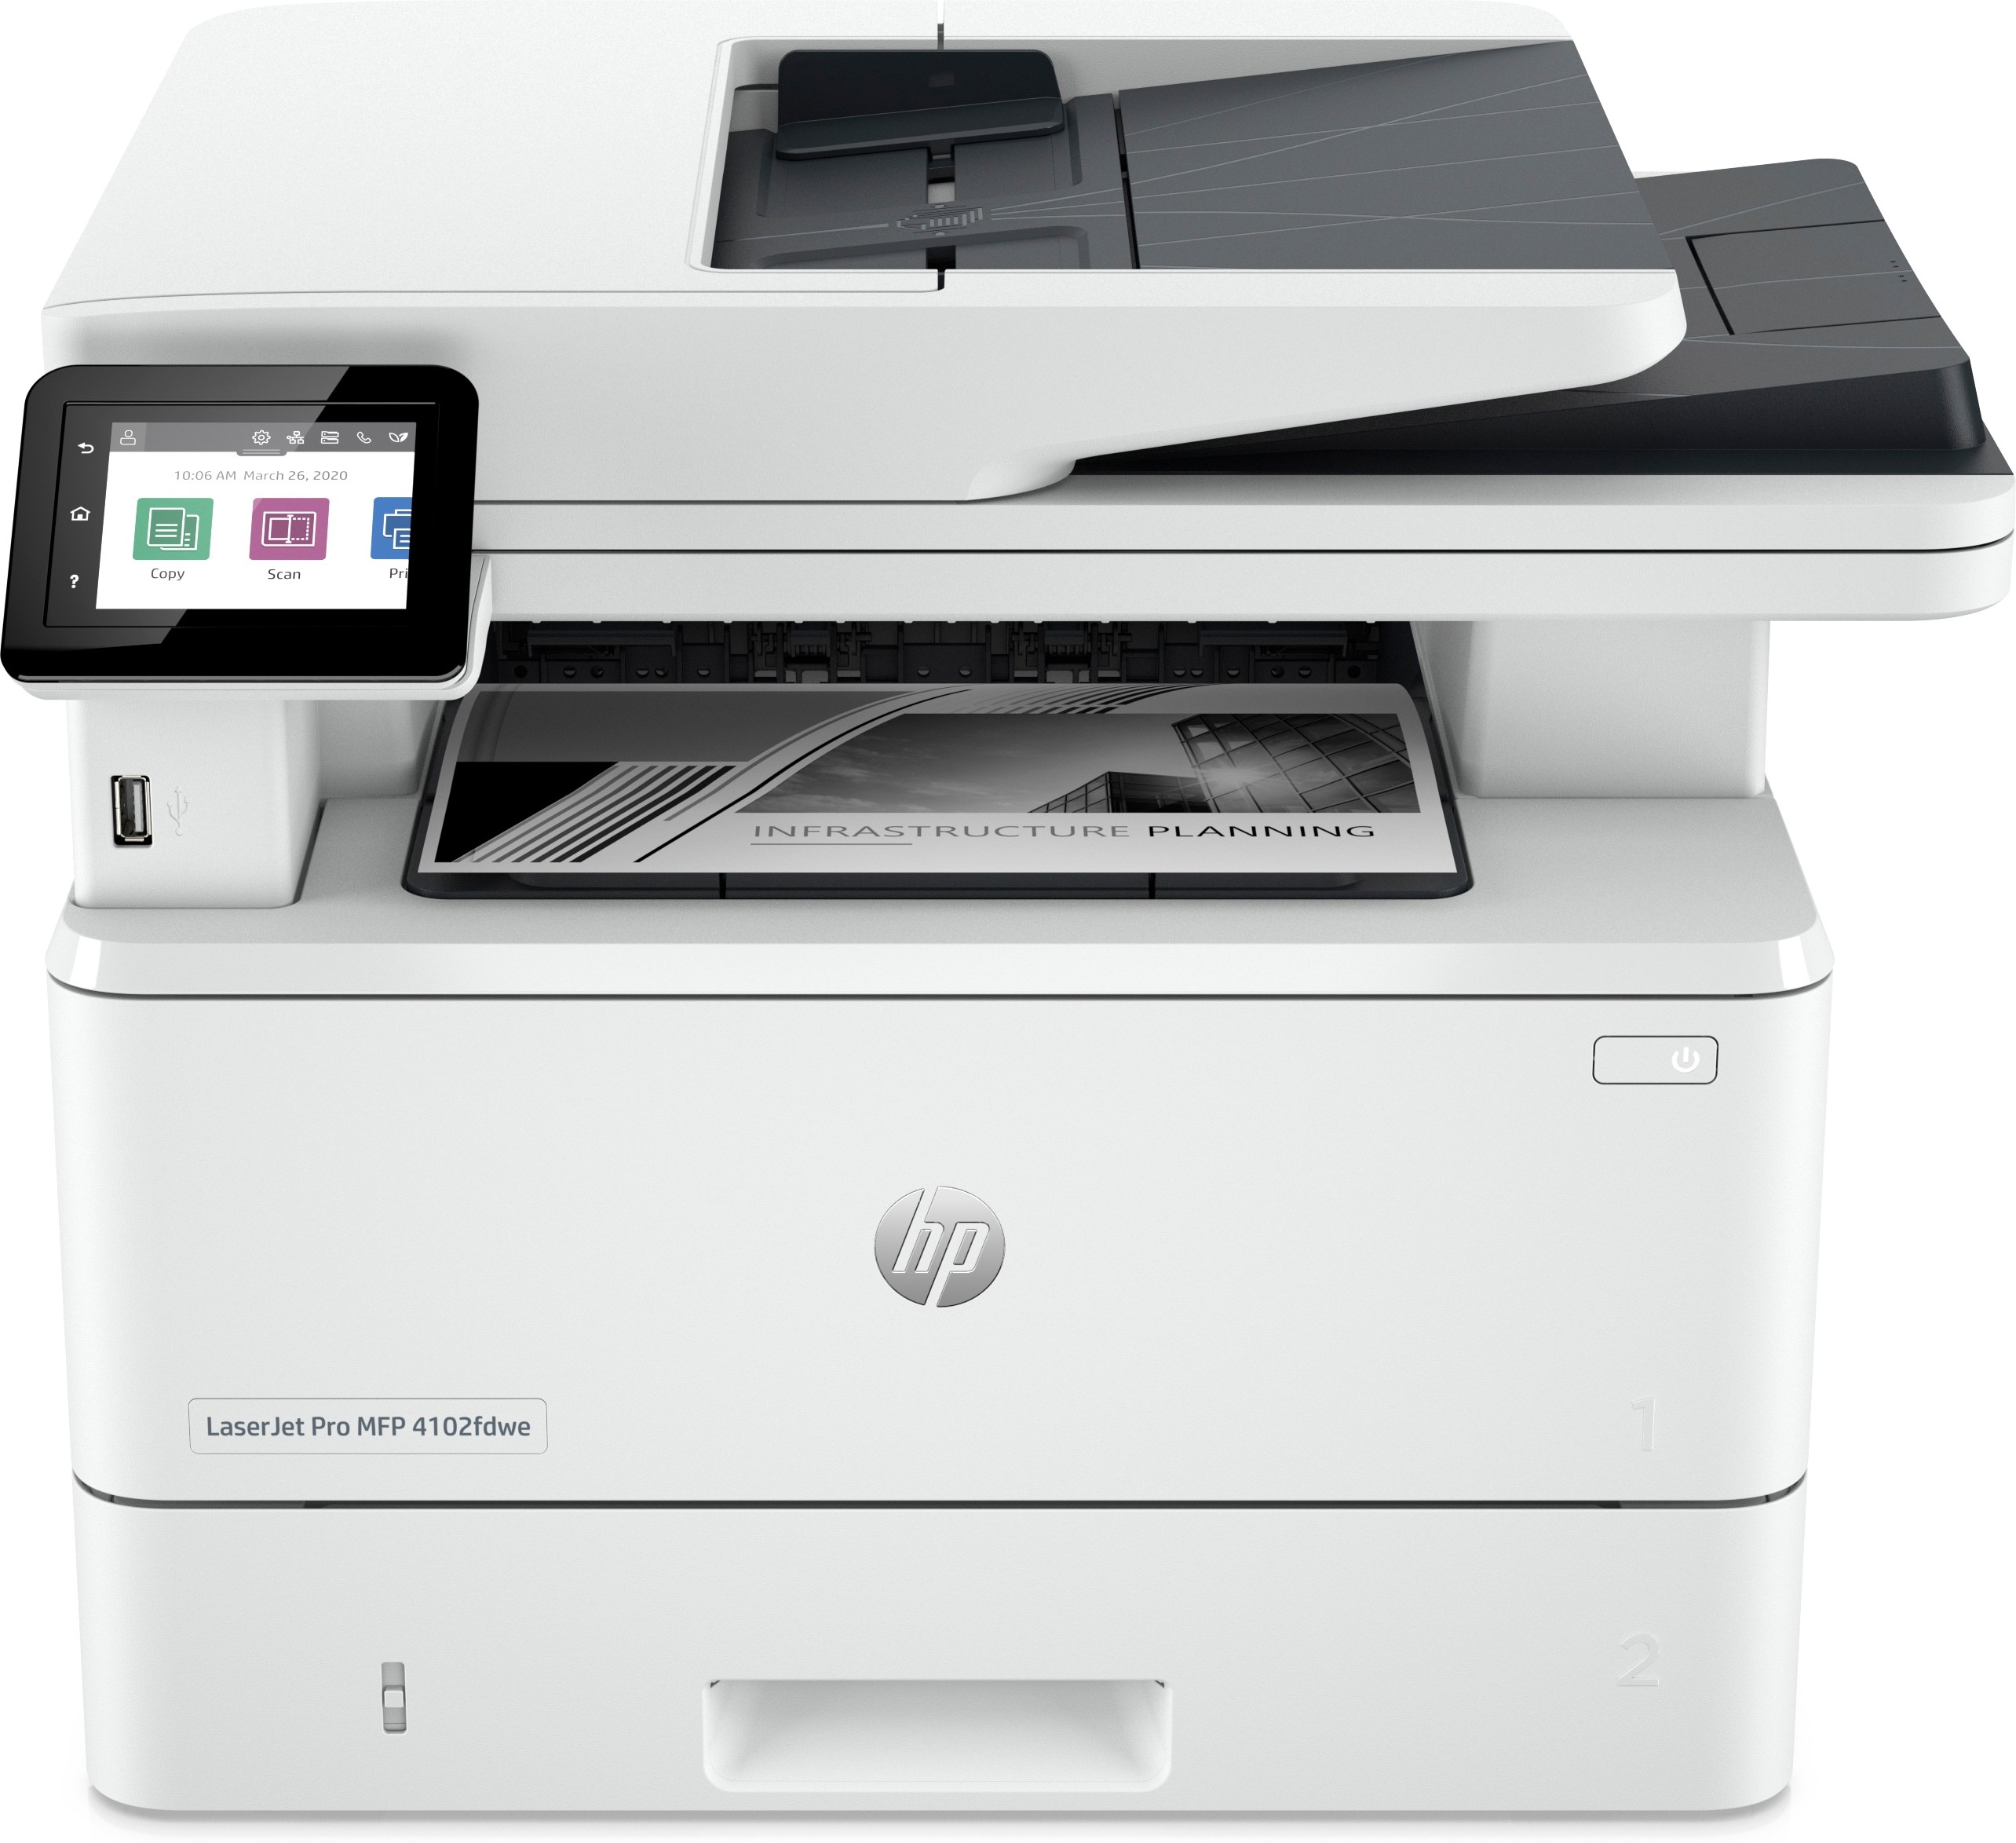 HP LaserJet Pro Stampante multifunzione 4102fdwe, Bianco e nero